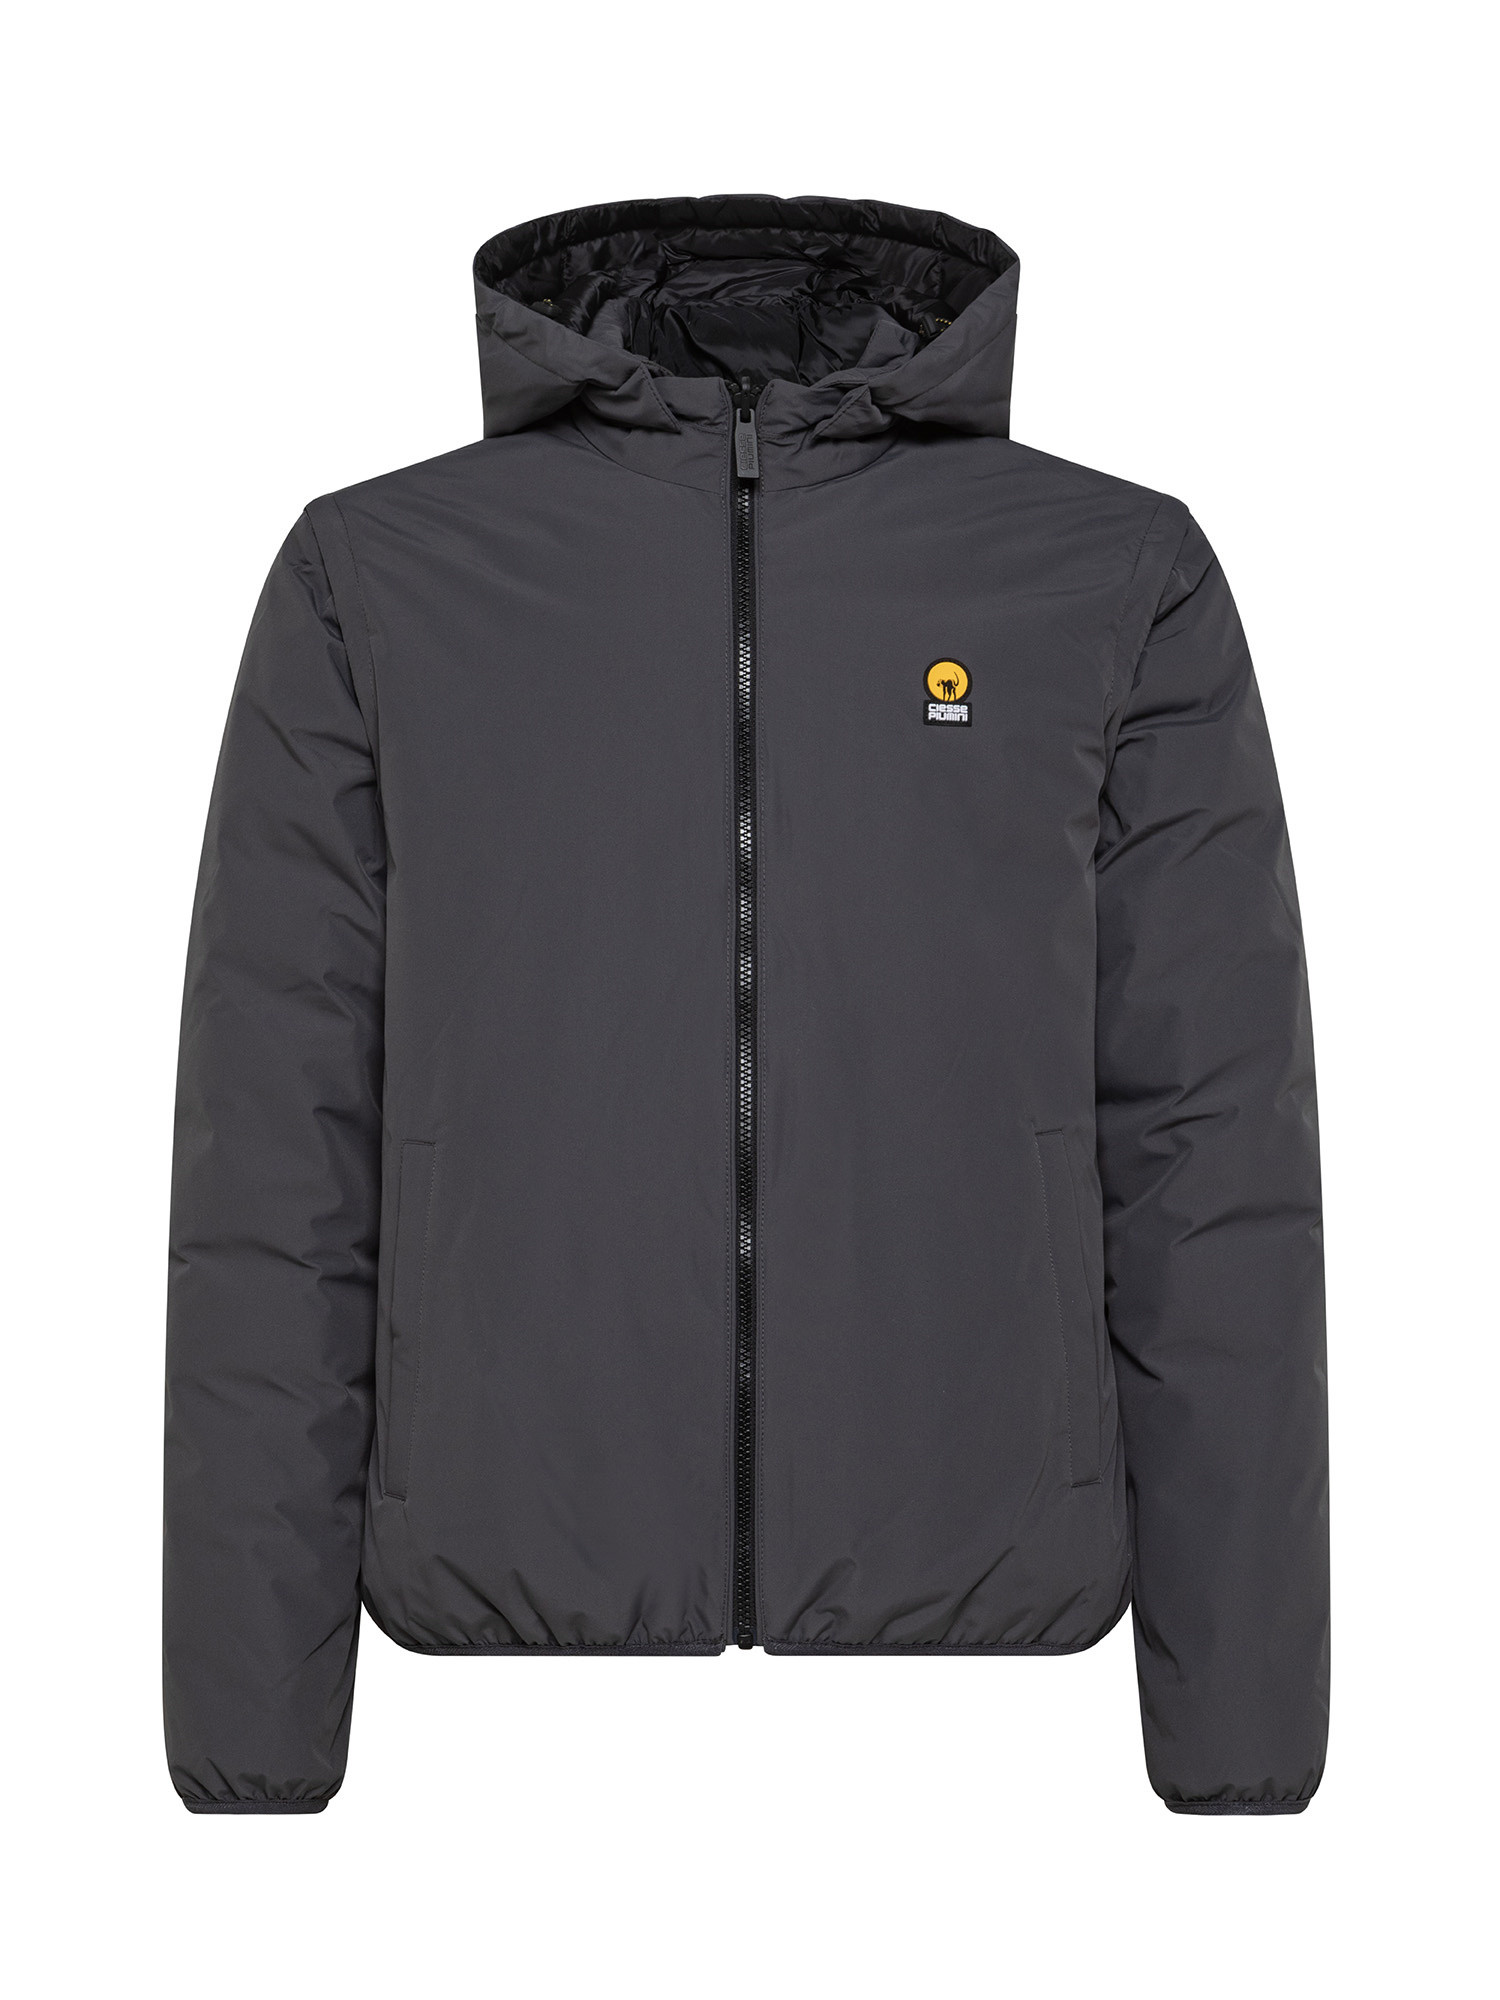 Ciesse Piumini - Reversible down jacket with hood, Black, large image number 0